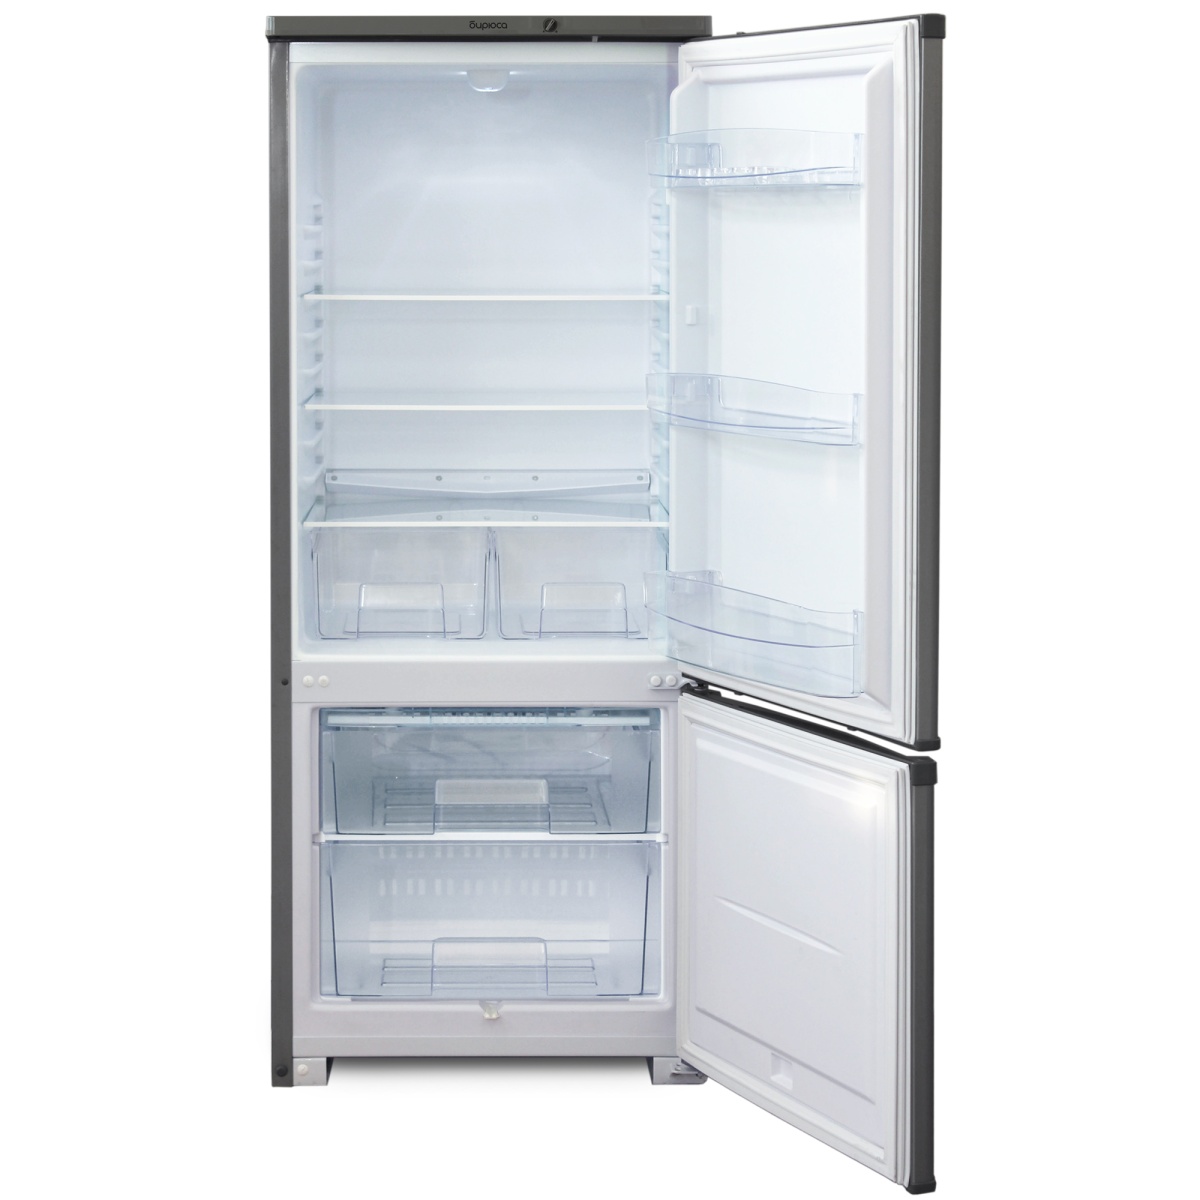 Холодильник Бирюса М151 (145см / Серый металлик)